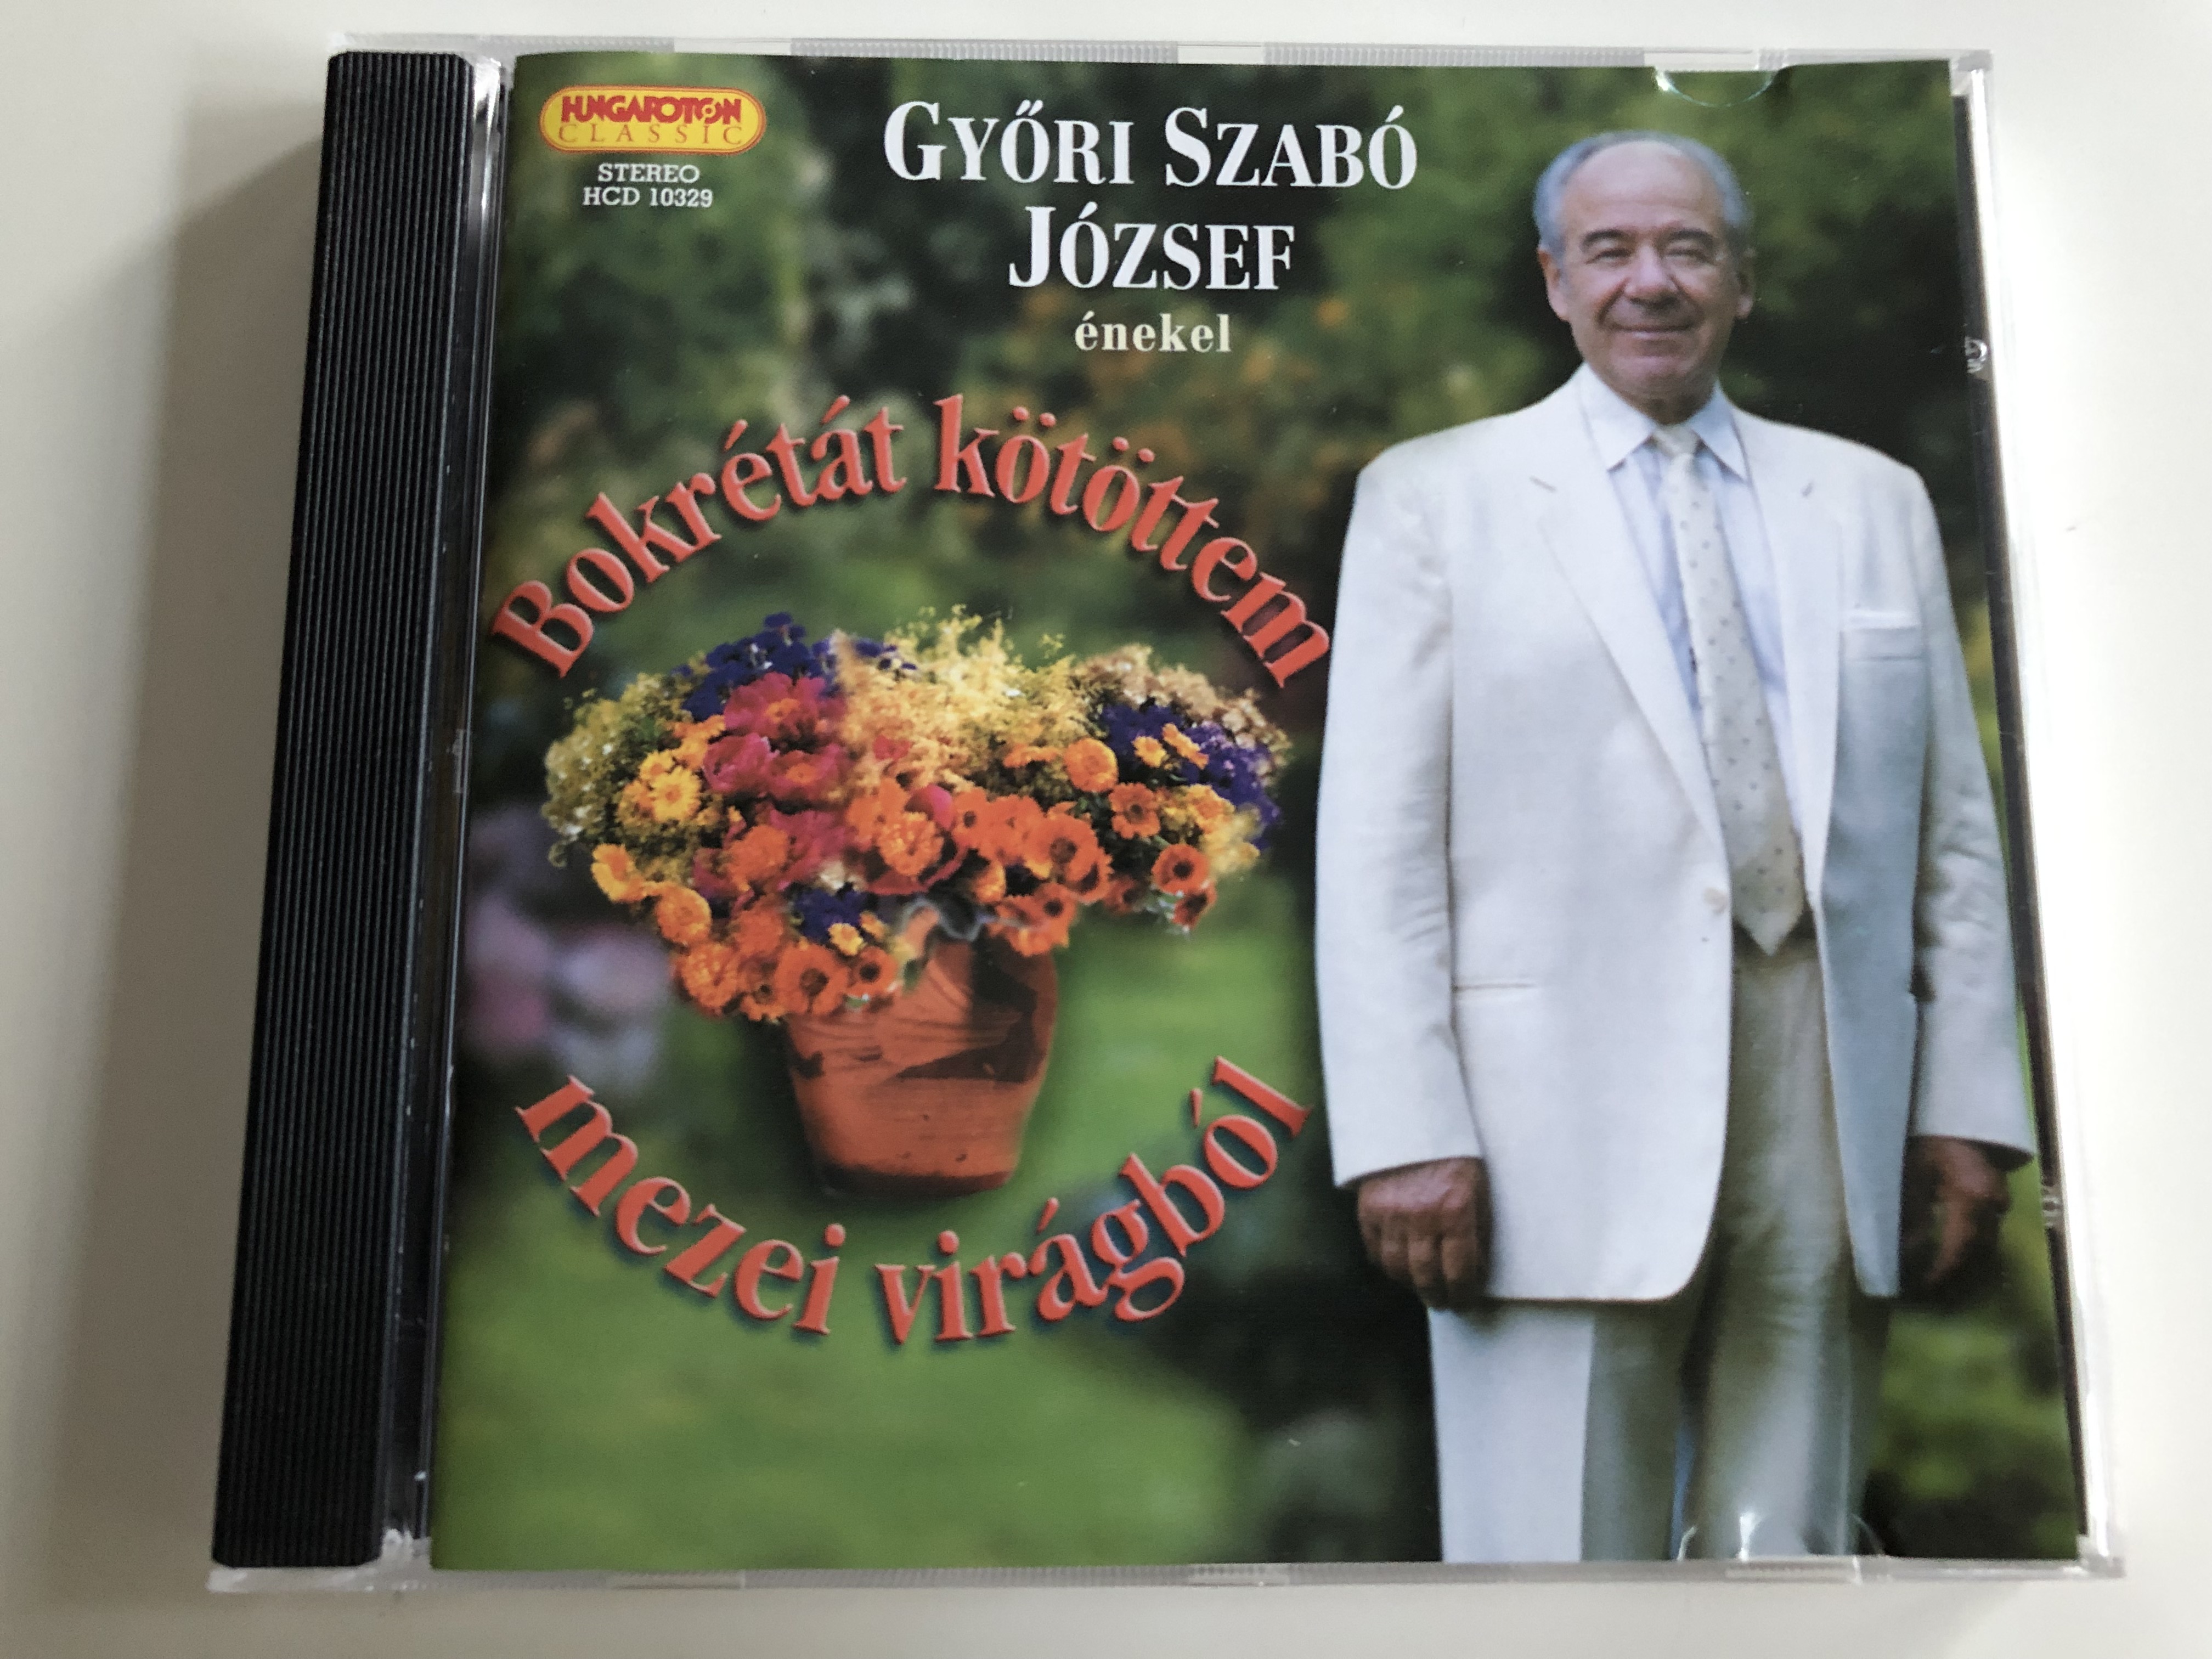 gy-ri-szab-j-zsef-nekel-bokr-t-t-k-t-ttem-mezei-vir-gb-l-hungaroton-classic-audio-cd-2006-hcd-10329-popular-hungarian-folk-songs-1-.jpg